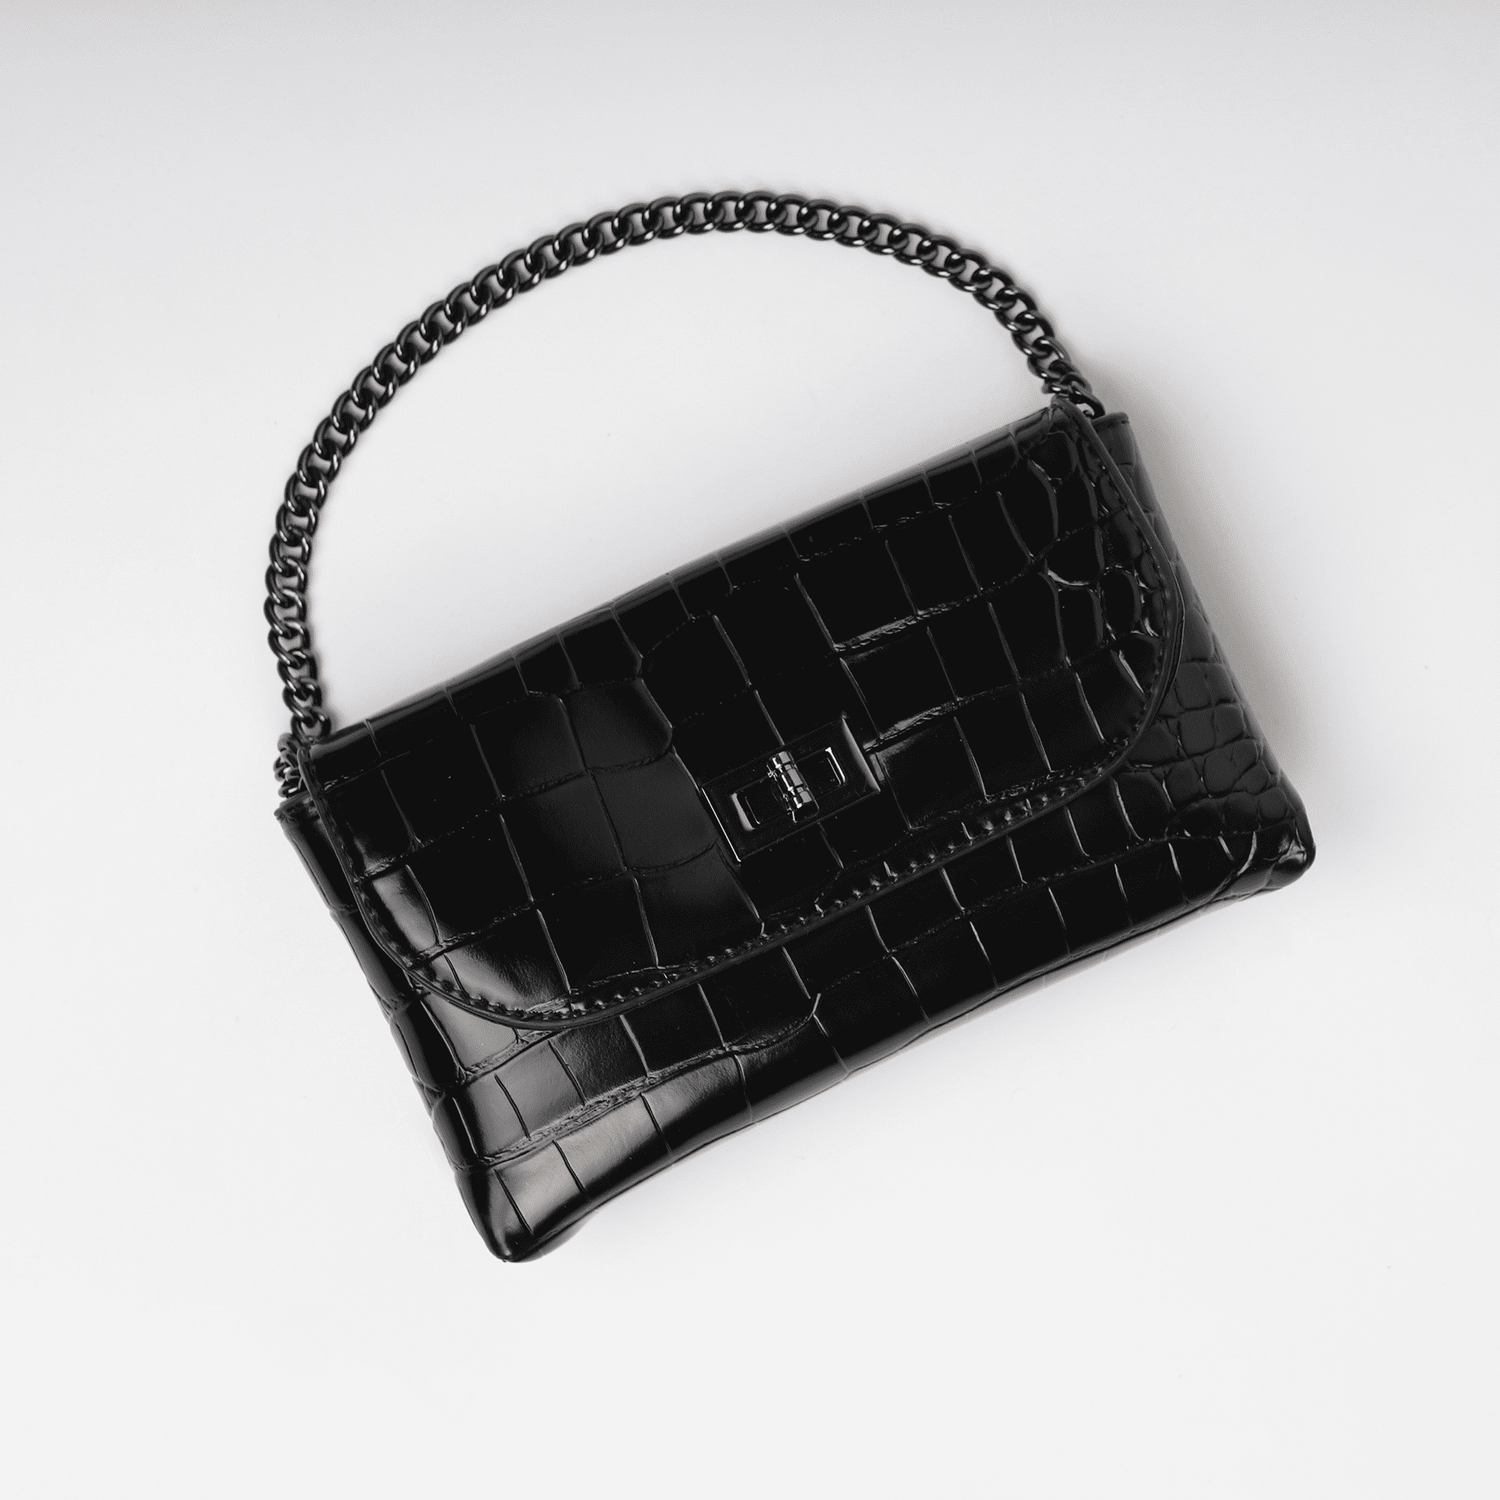 Black faux leather handbag